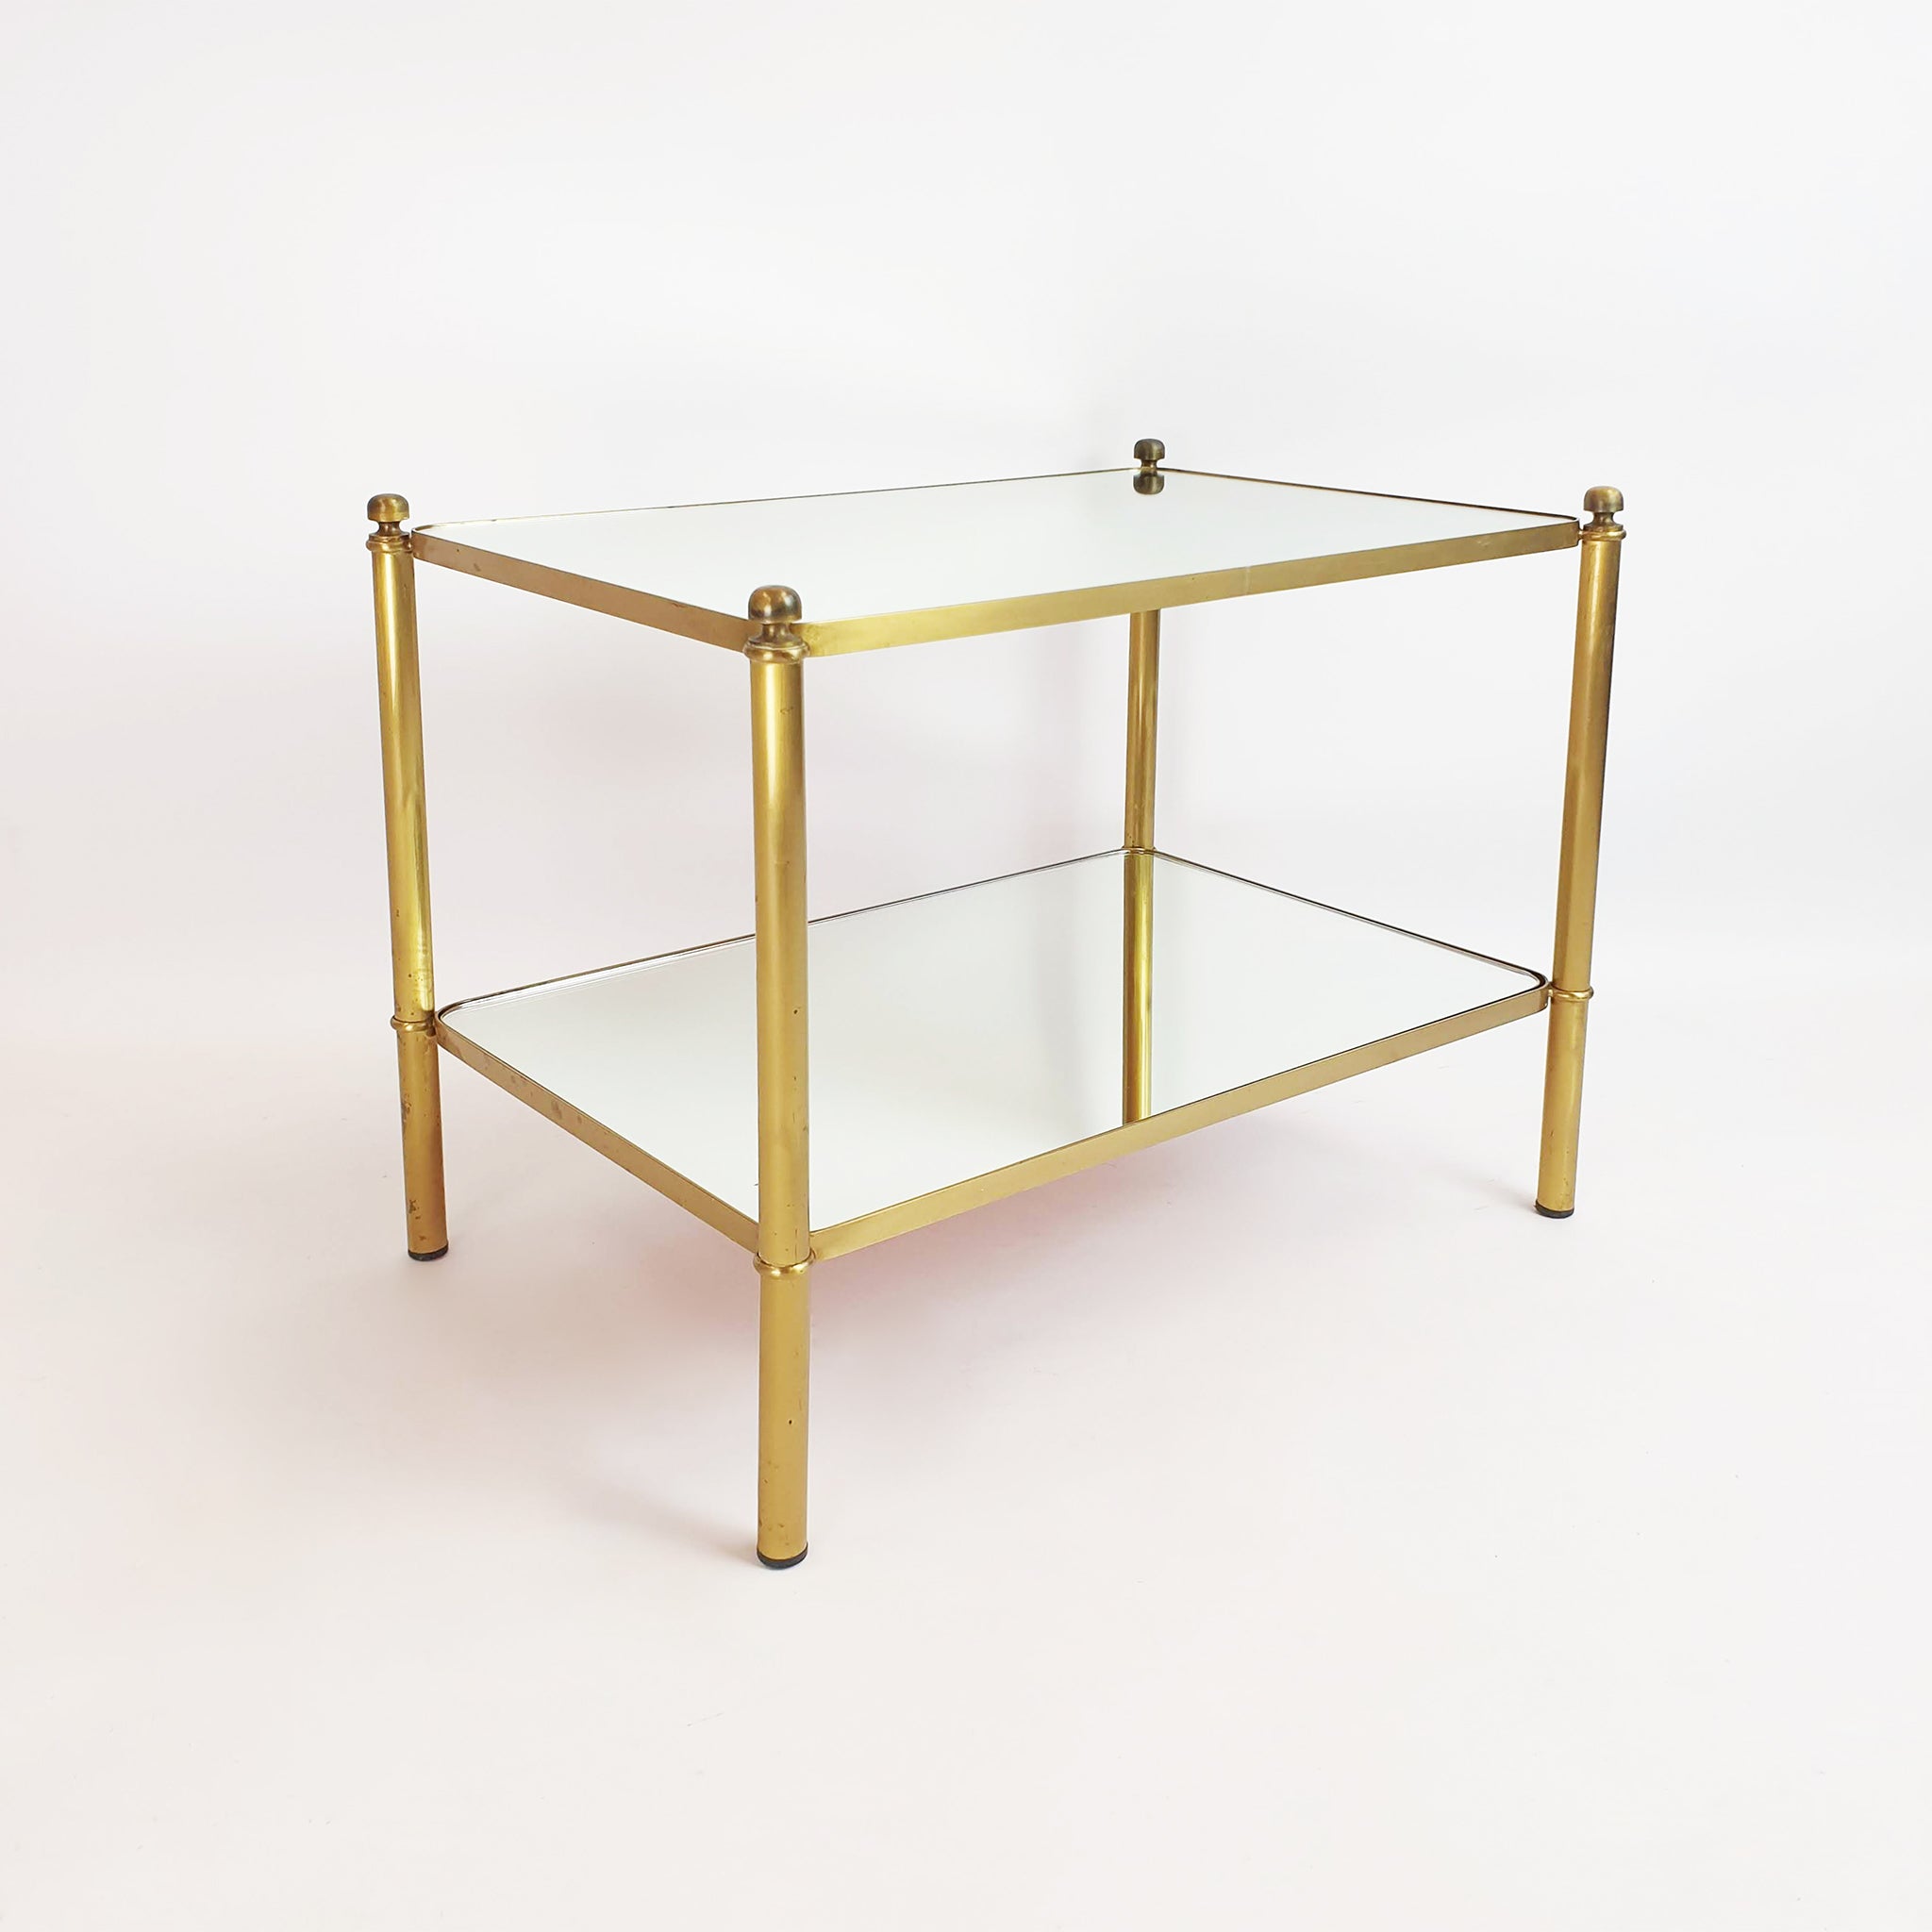 1970s Italian mirrored brass side table